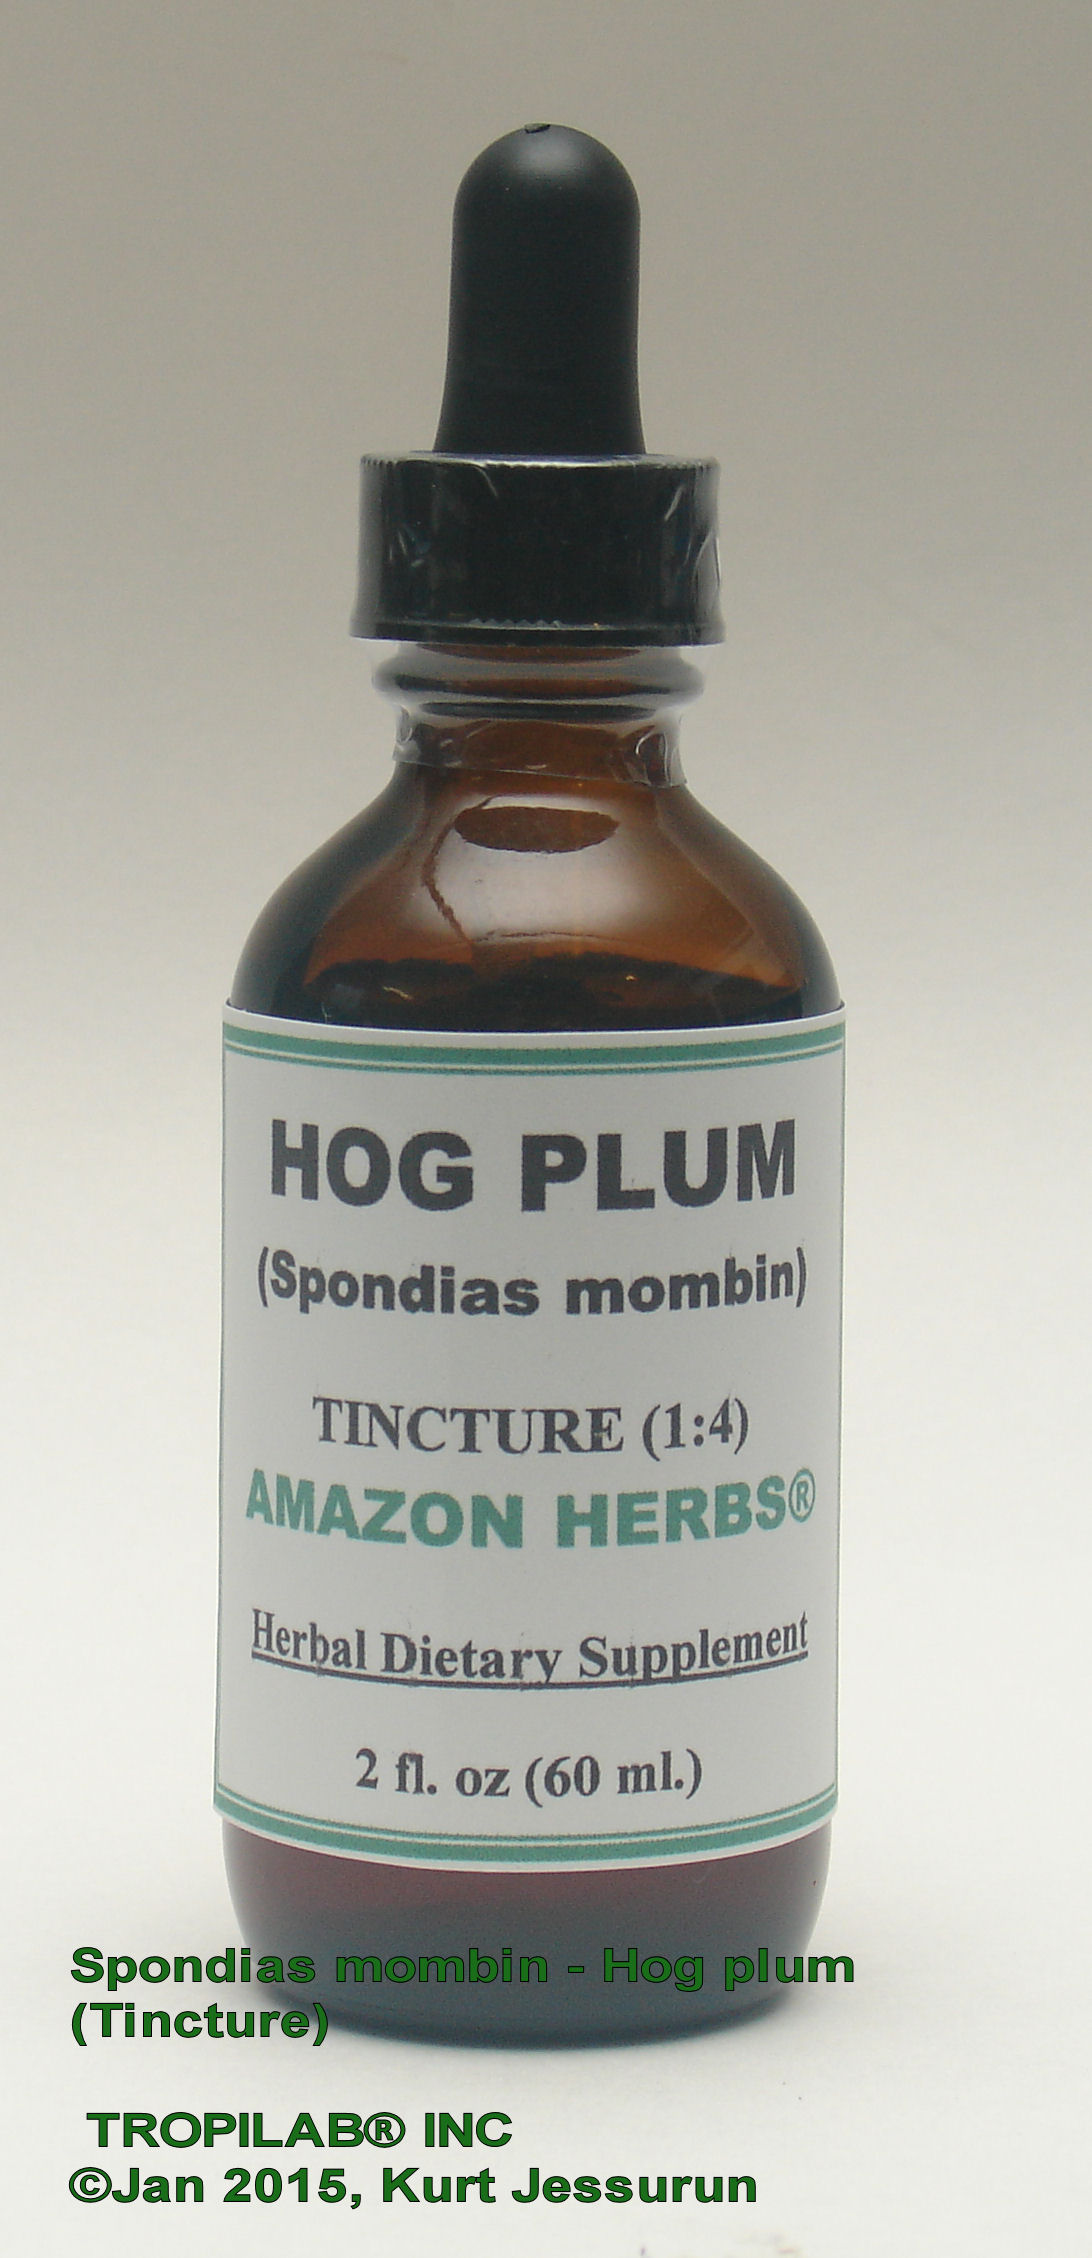 Spondias mombin - Hog plum herbal tincture - TROPILAB